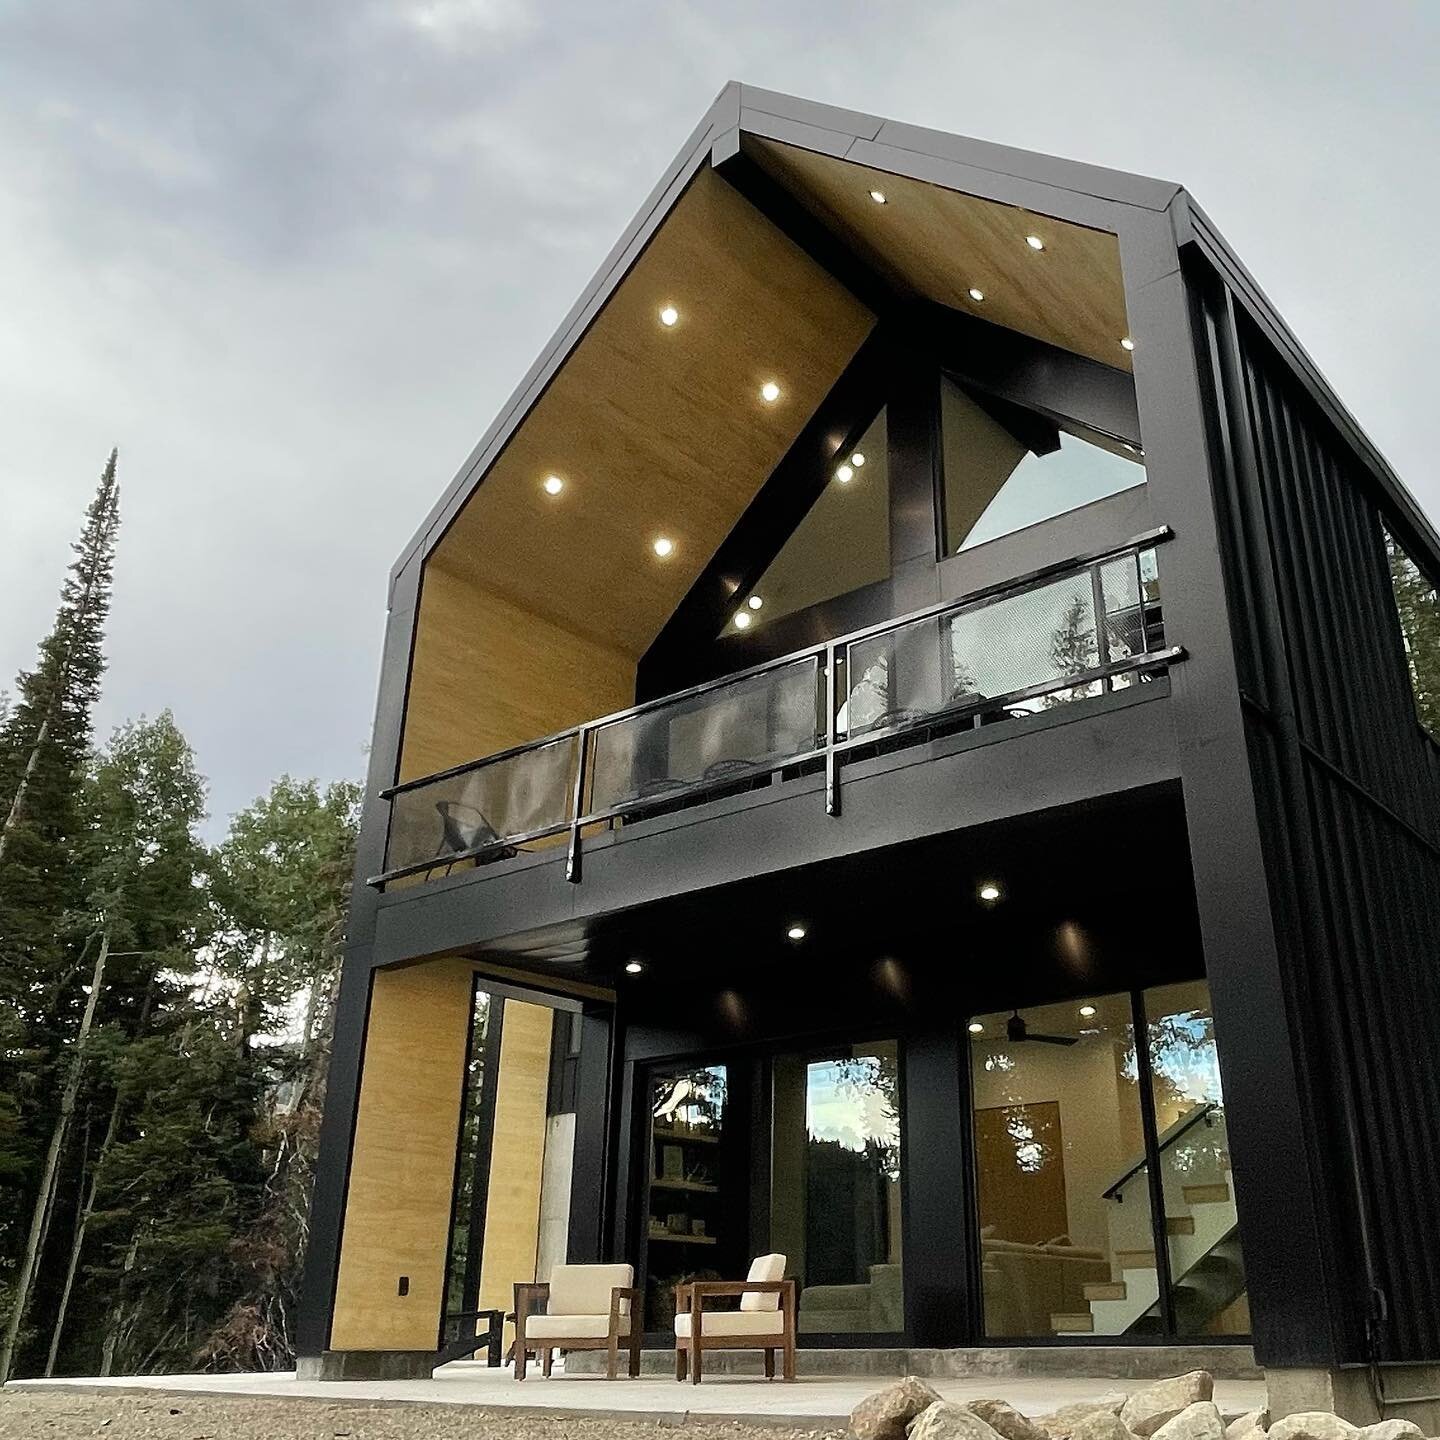 Black Cabin in the Woods
.
.
.
Architect &amp; Design: @hebdonstudios 
Builder: PFJ Corp